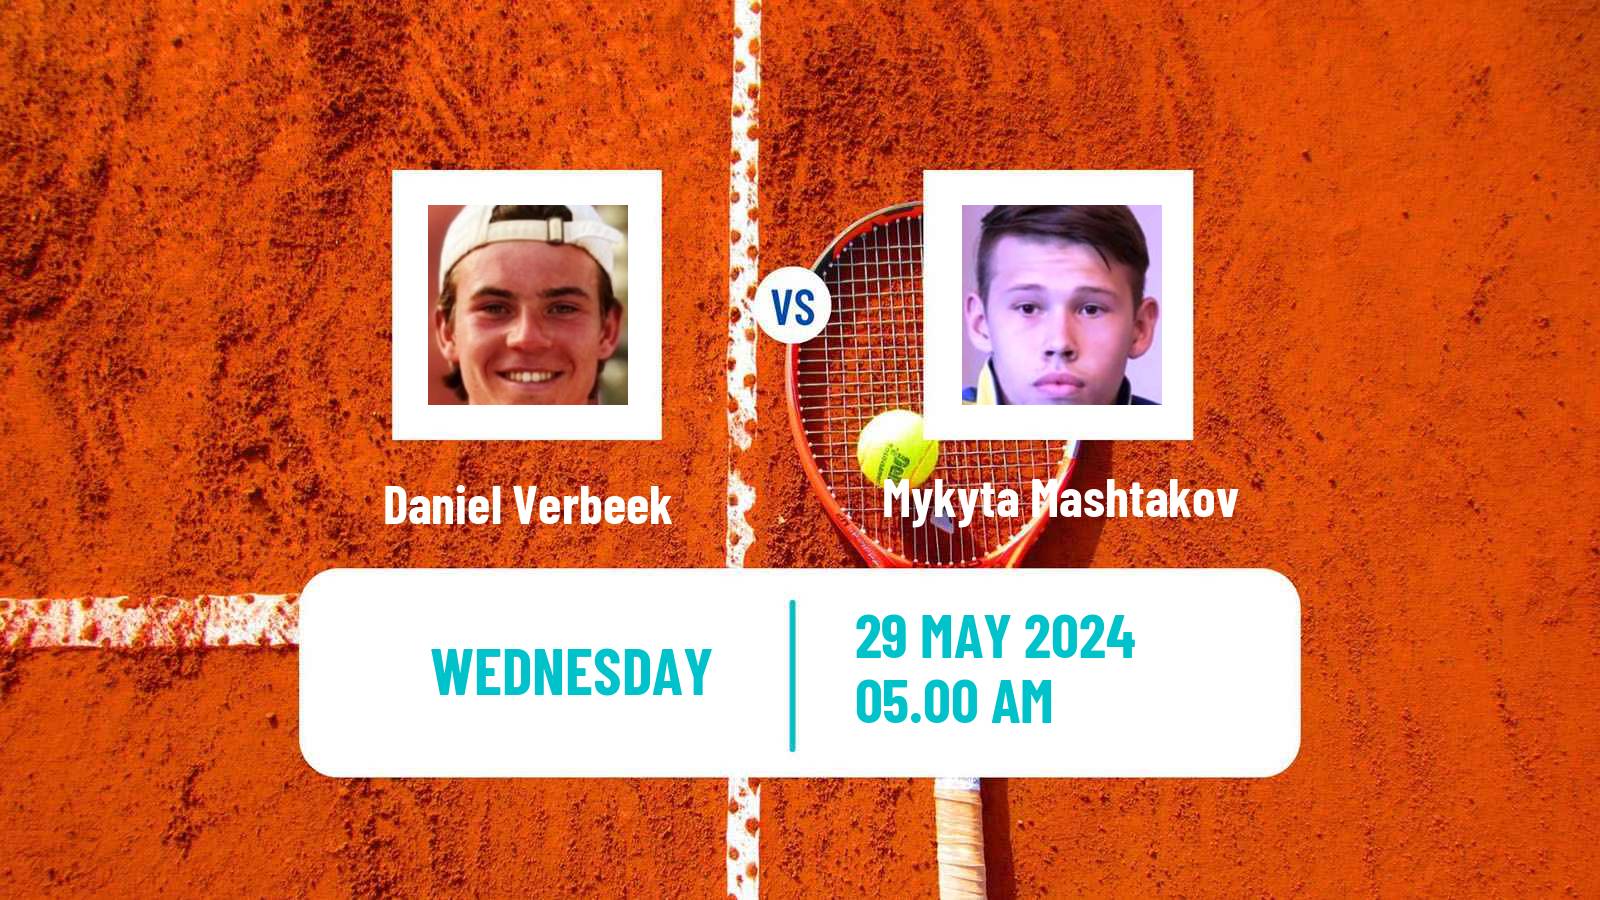 Tennis ITF M15 Bol 2 Men Daniel Verbeek - Mykyta Mashtakov